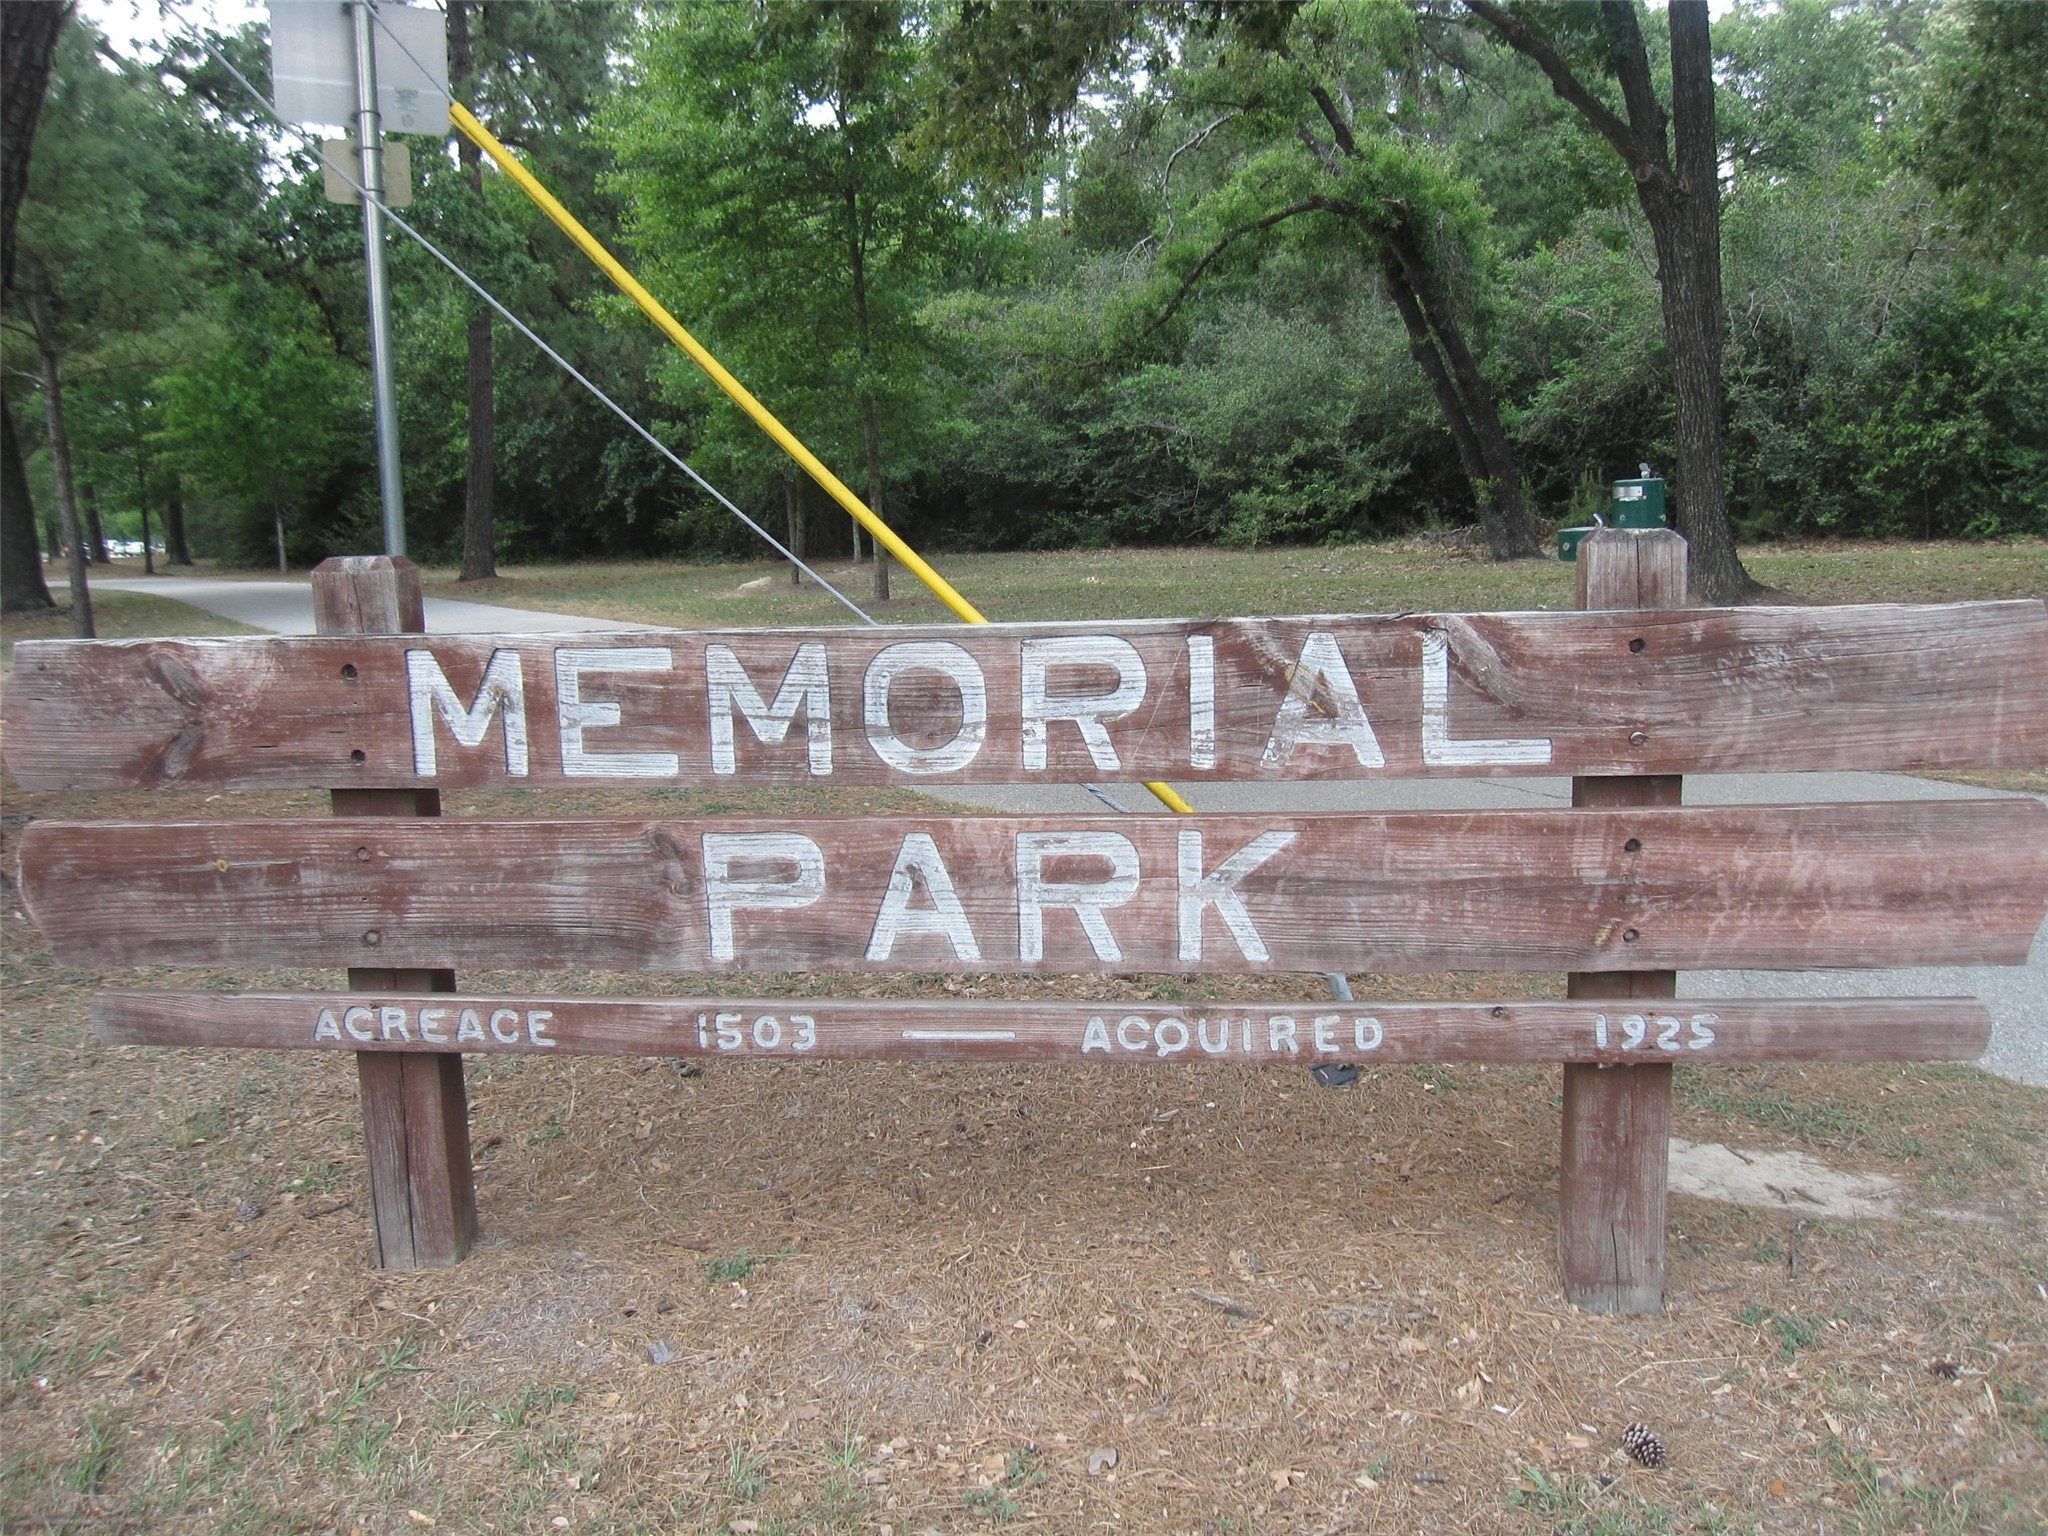 Memorial Park 1502 Acres